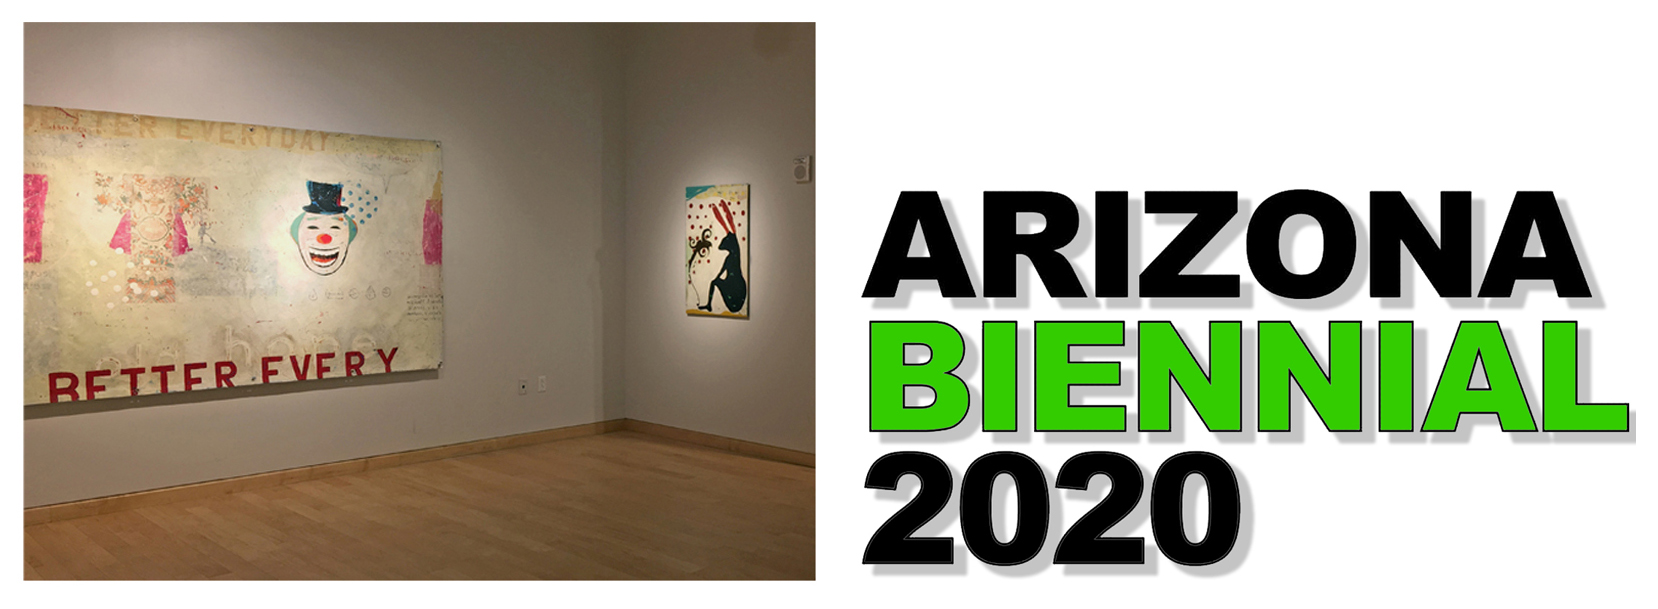 Arizona Biennial, Tucson Museum of Art, 2020.